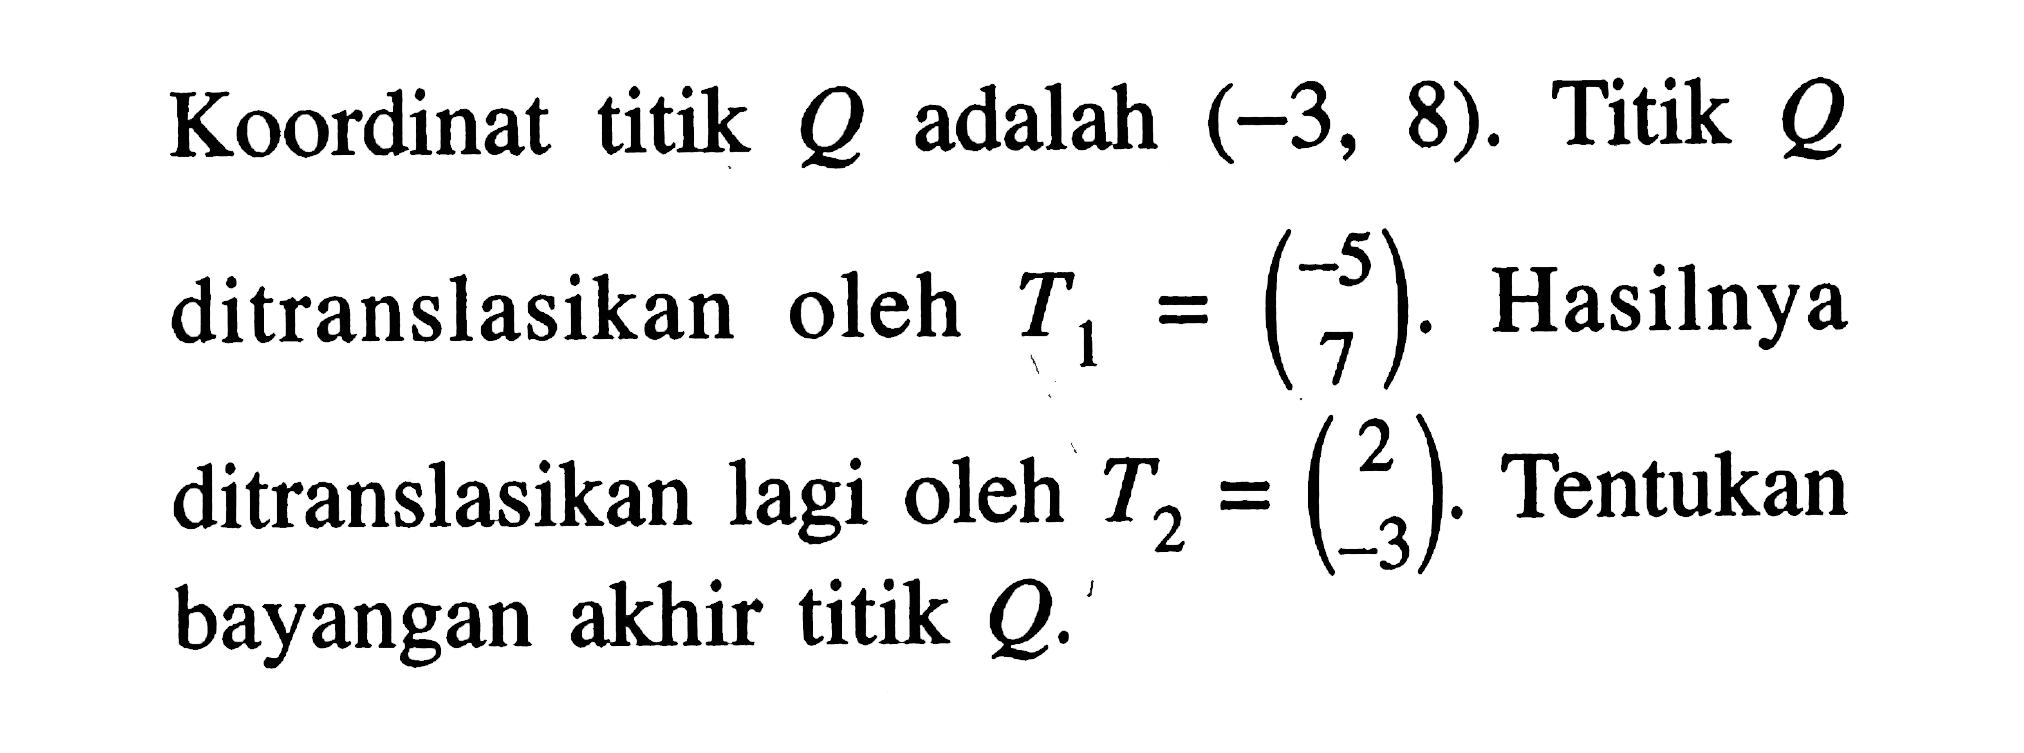 Koordinat titik Q adalah (-3,8). Titik Q ditranslasikan oleh T1=(-5 7). Hasilnya ditranslasikan lagi oleh T2=(2 -3). Tentukan bayangan akhir titik Q.